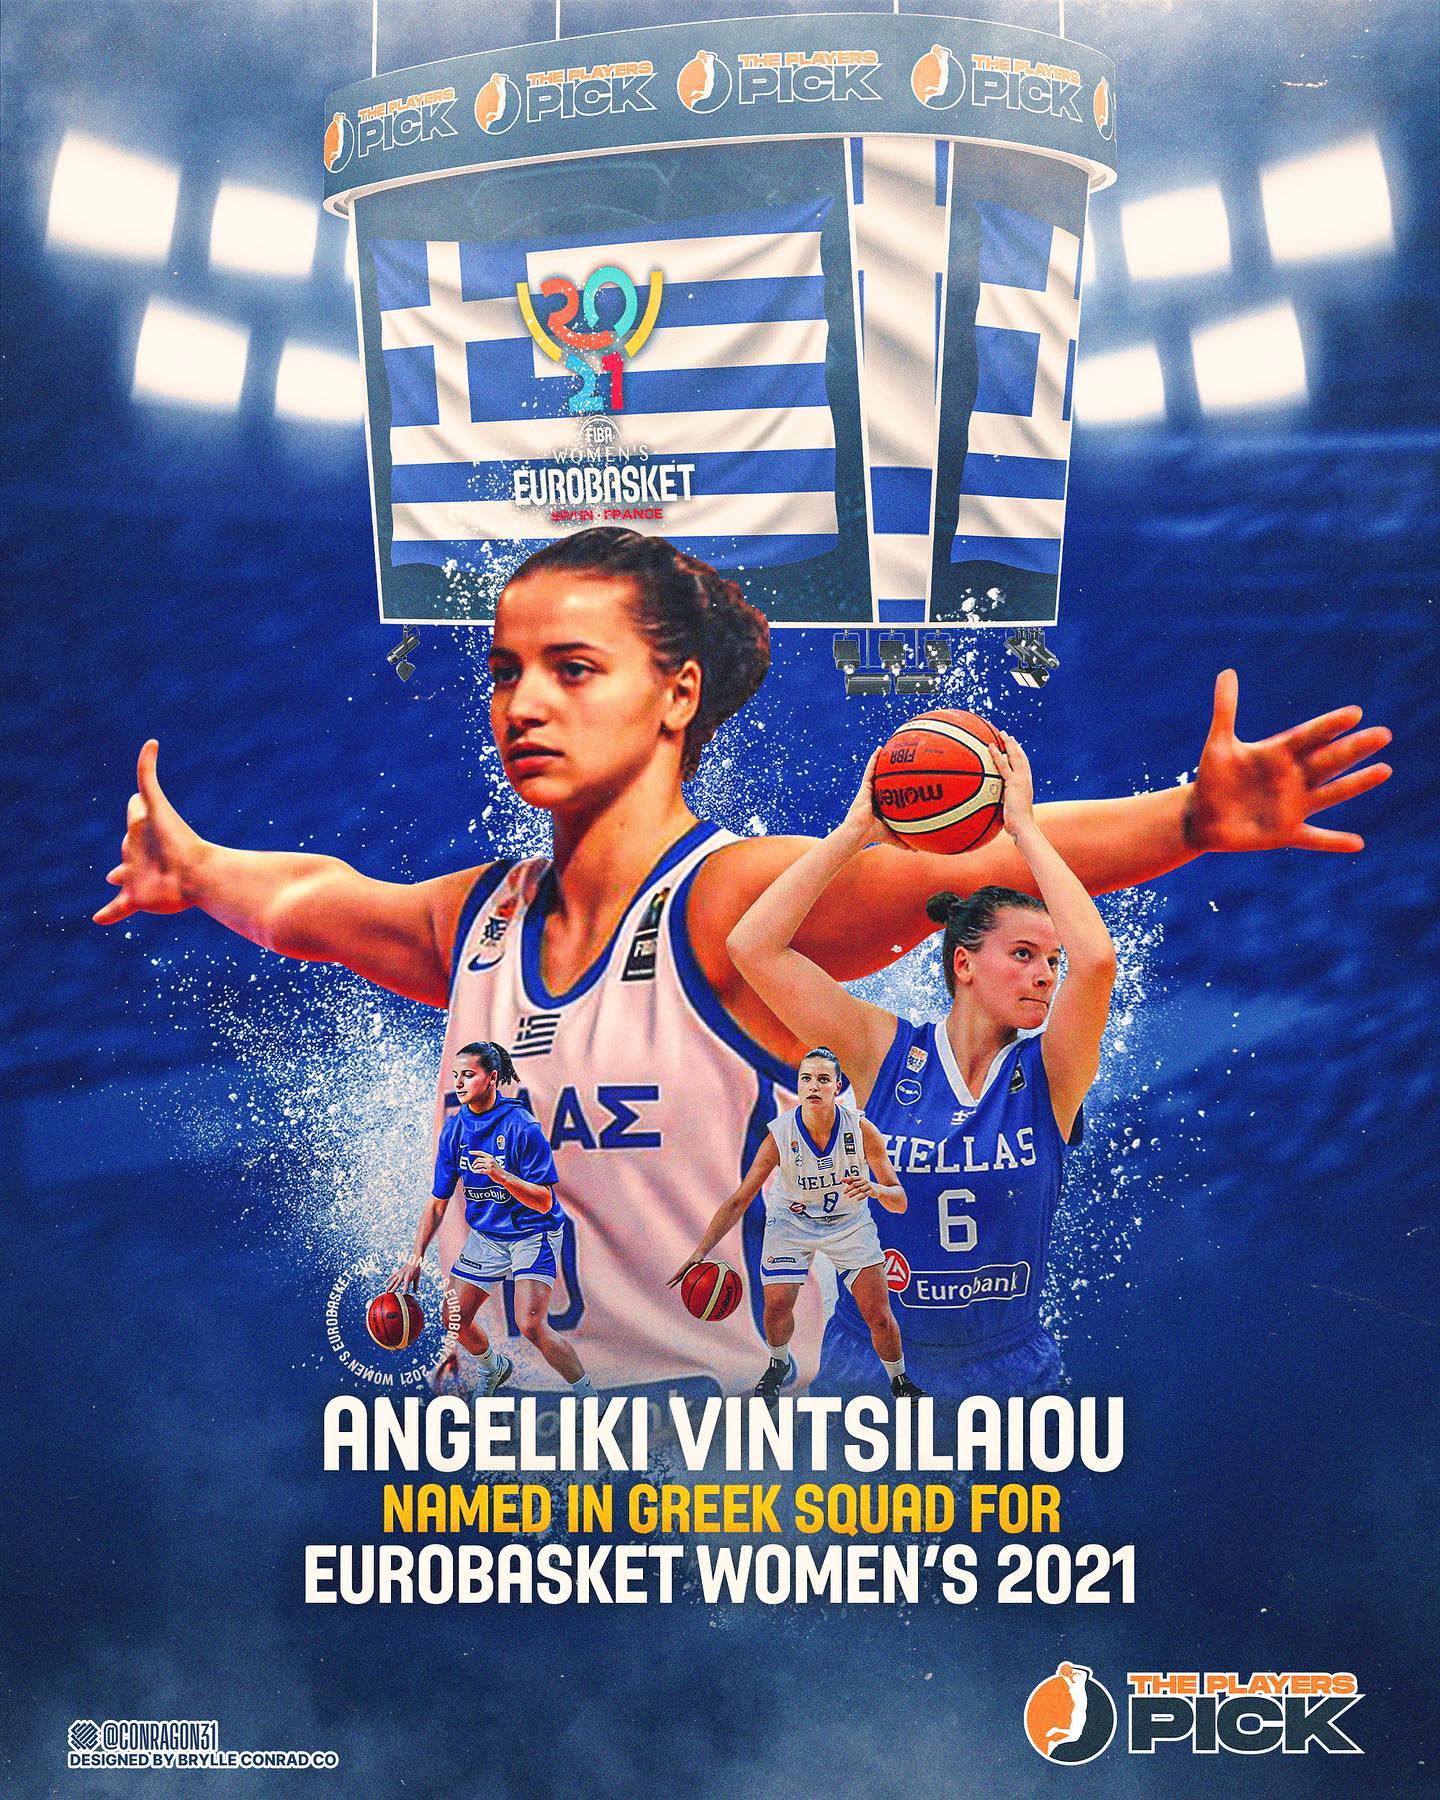 Angeliki Vintsilaiou named in Greek squad for Eurobasket 2021!